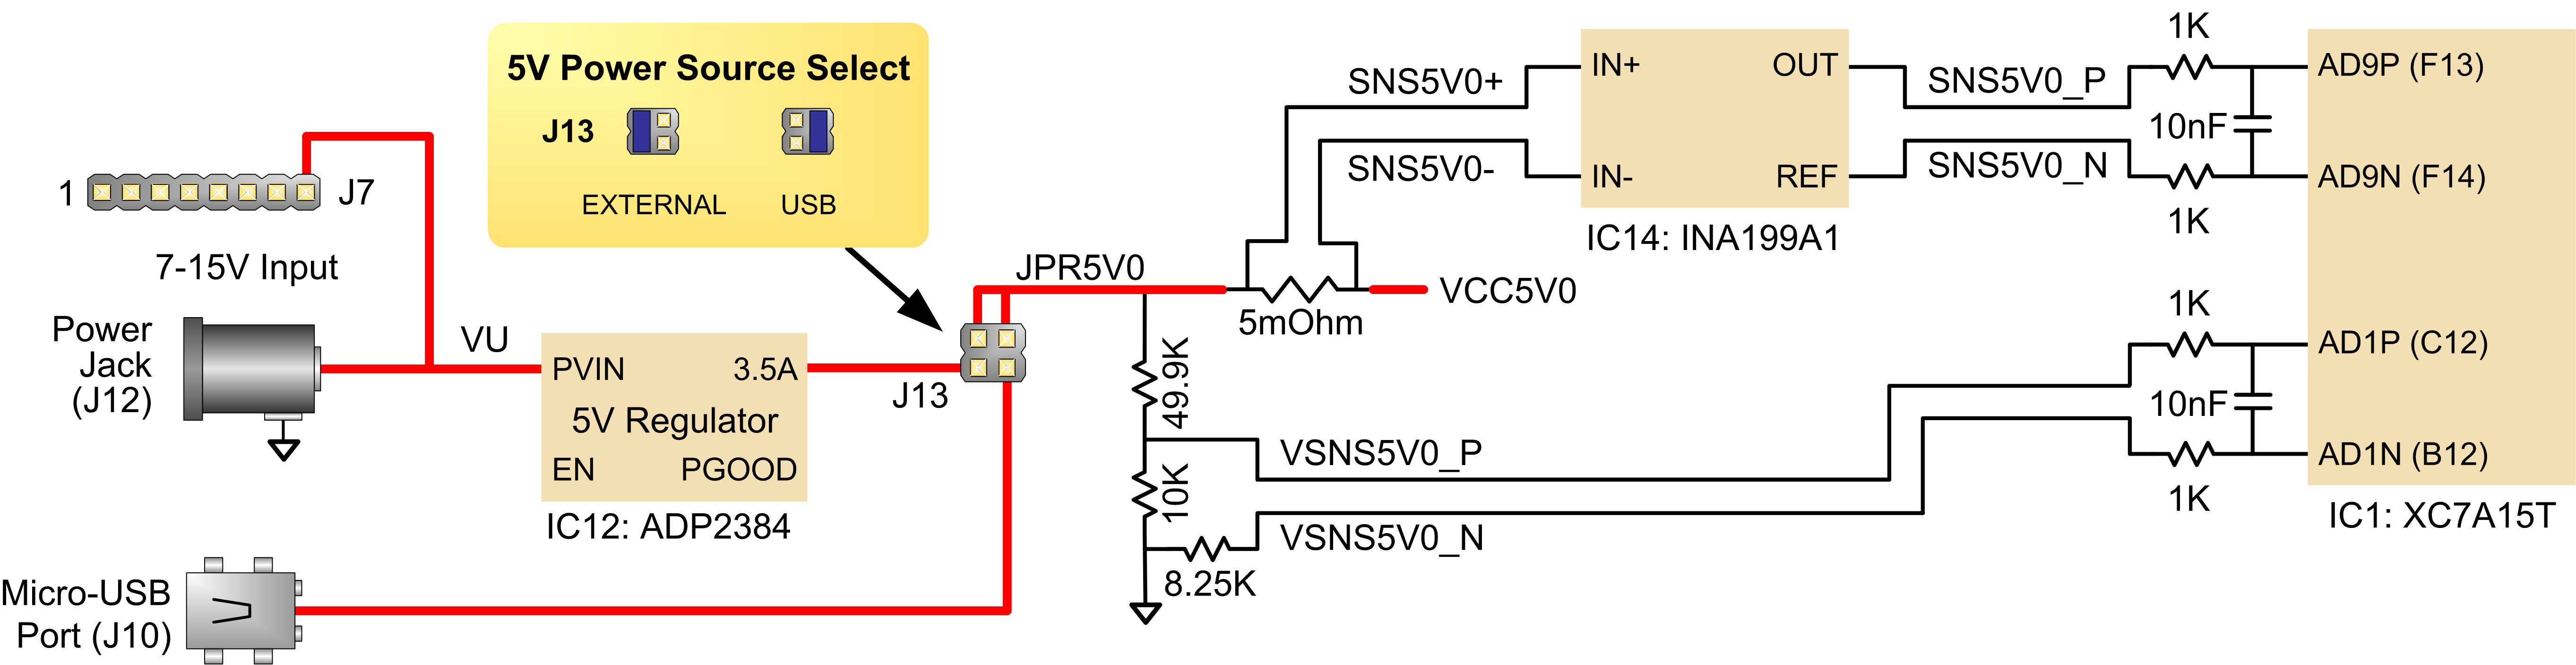 Figure 3.3.1. 5V supply power consumption.